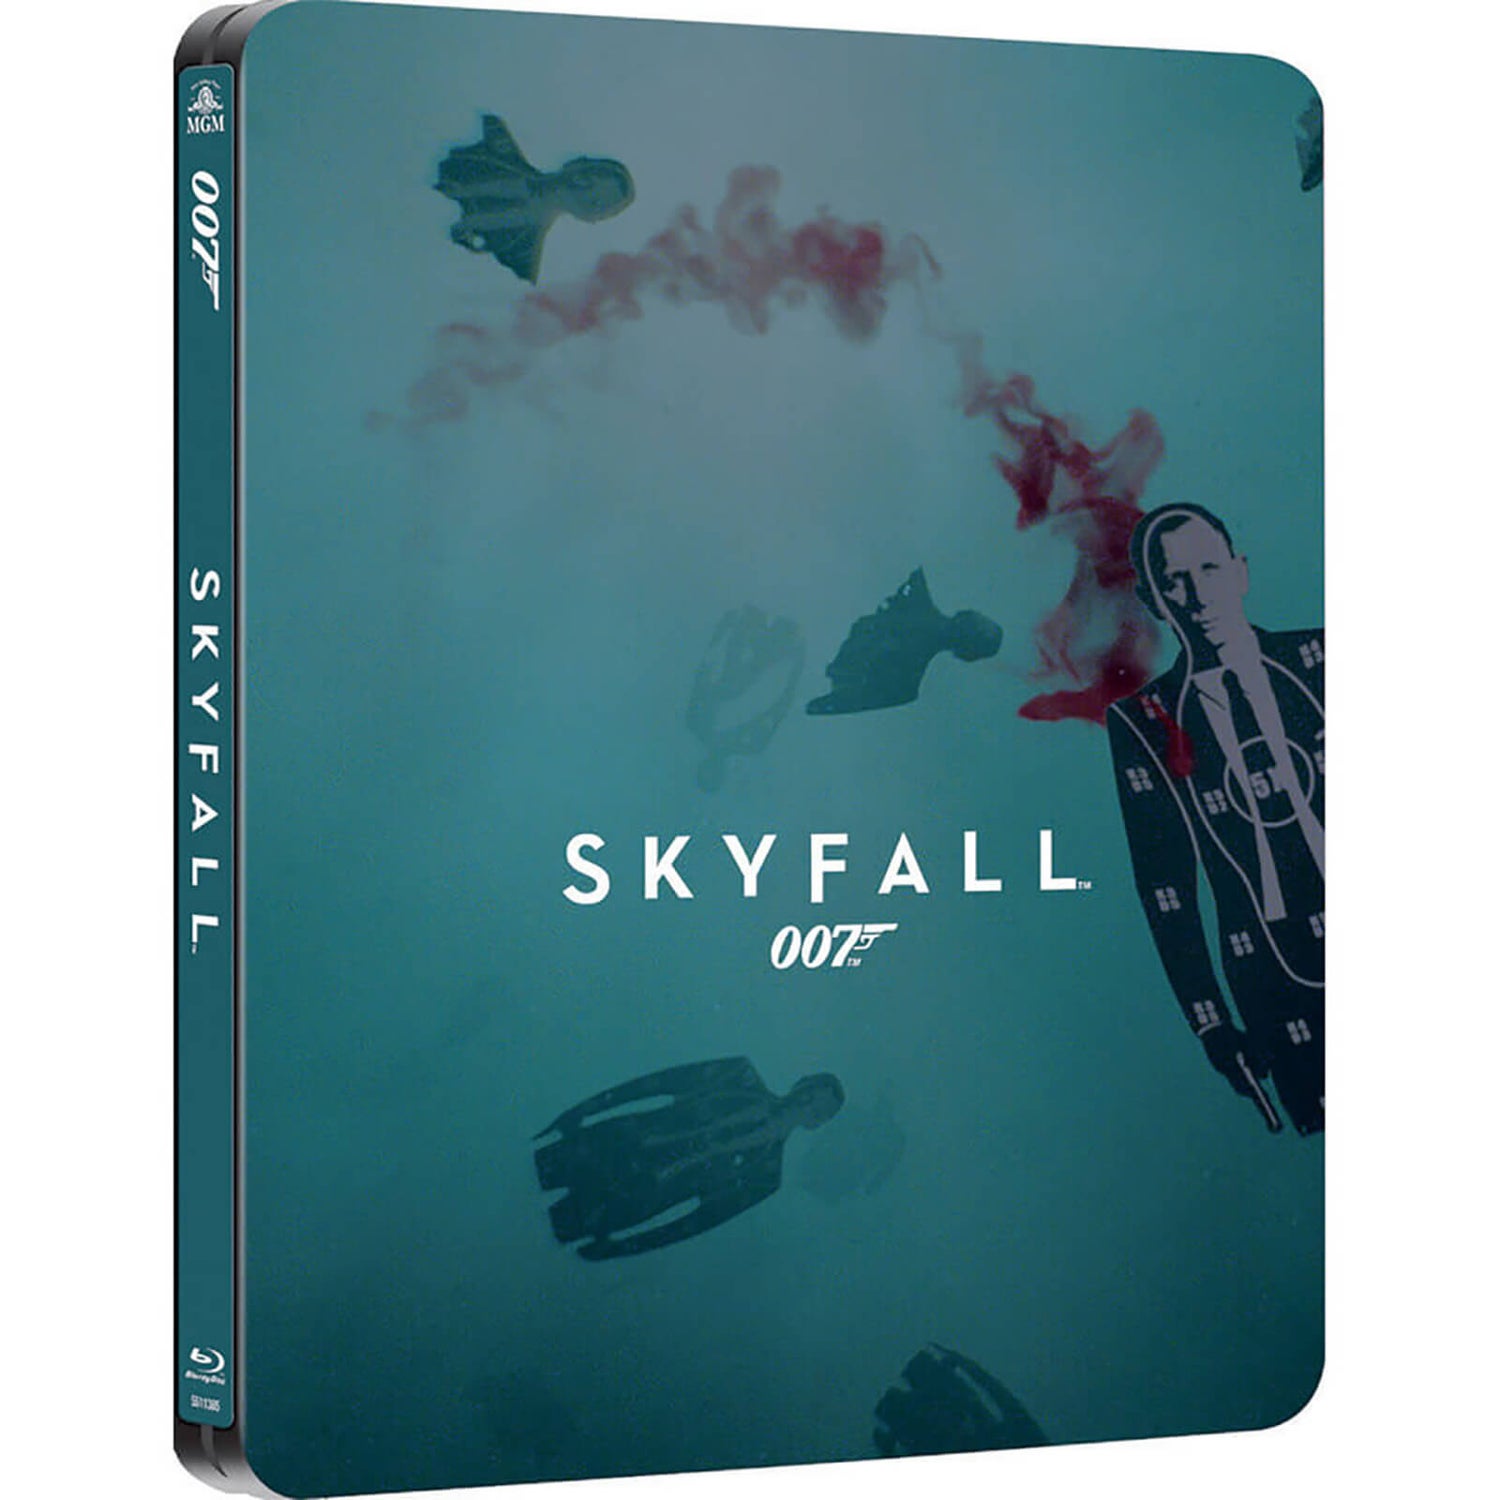 Skyfall Blu-ray Steelbook - Zavvi UK Exclusive Limited Edition Steelbook